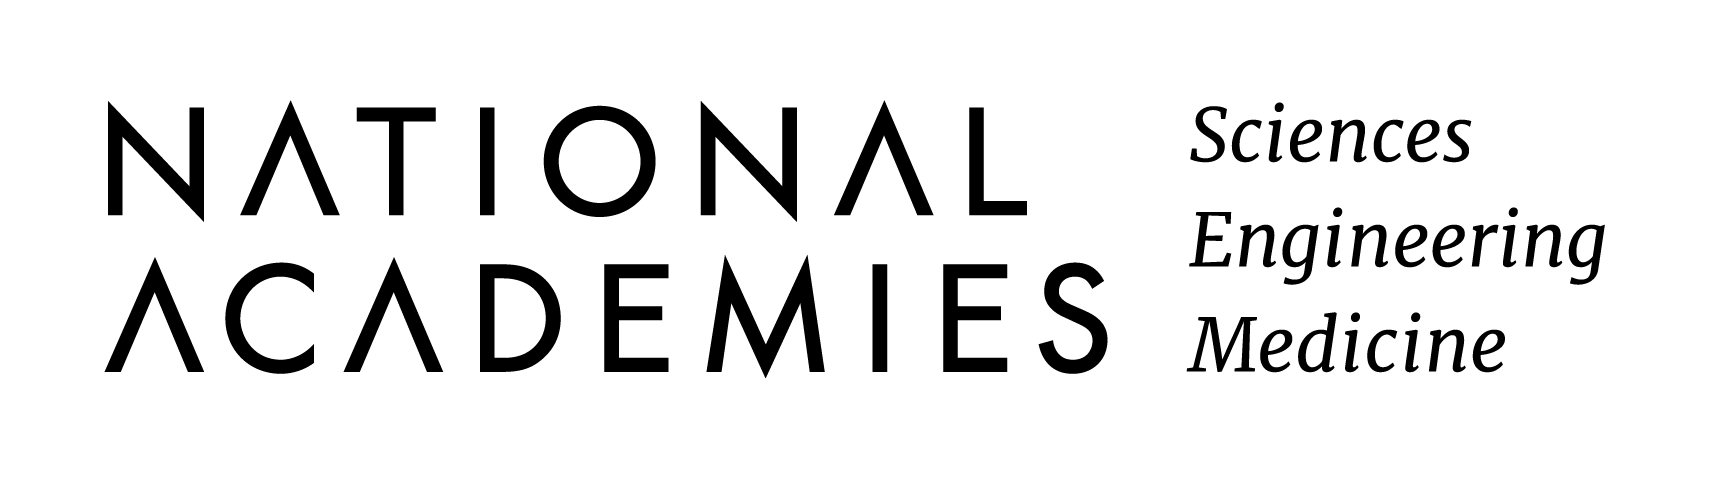 National Academies of Sciences, Engineering, and Medicine Logo